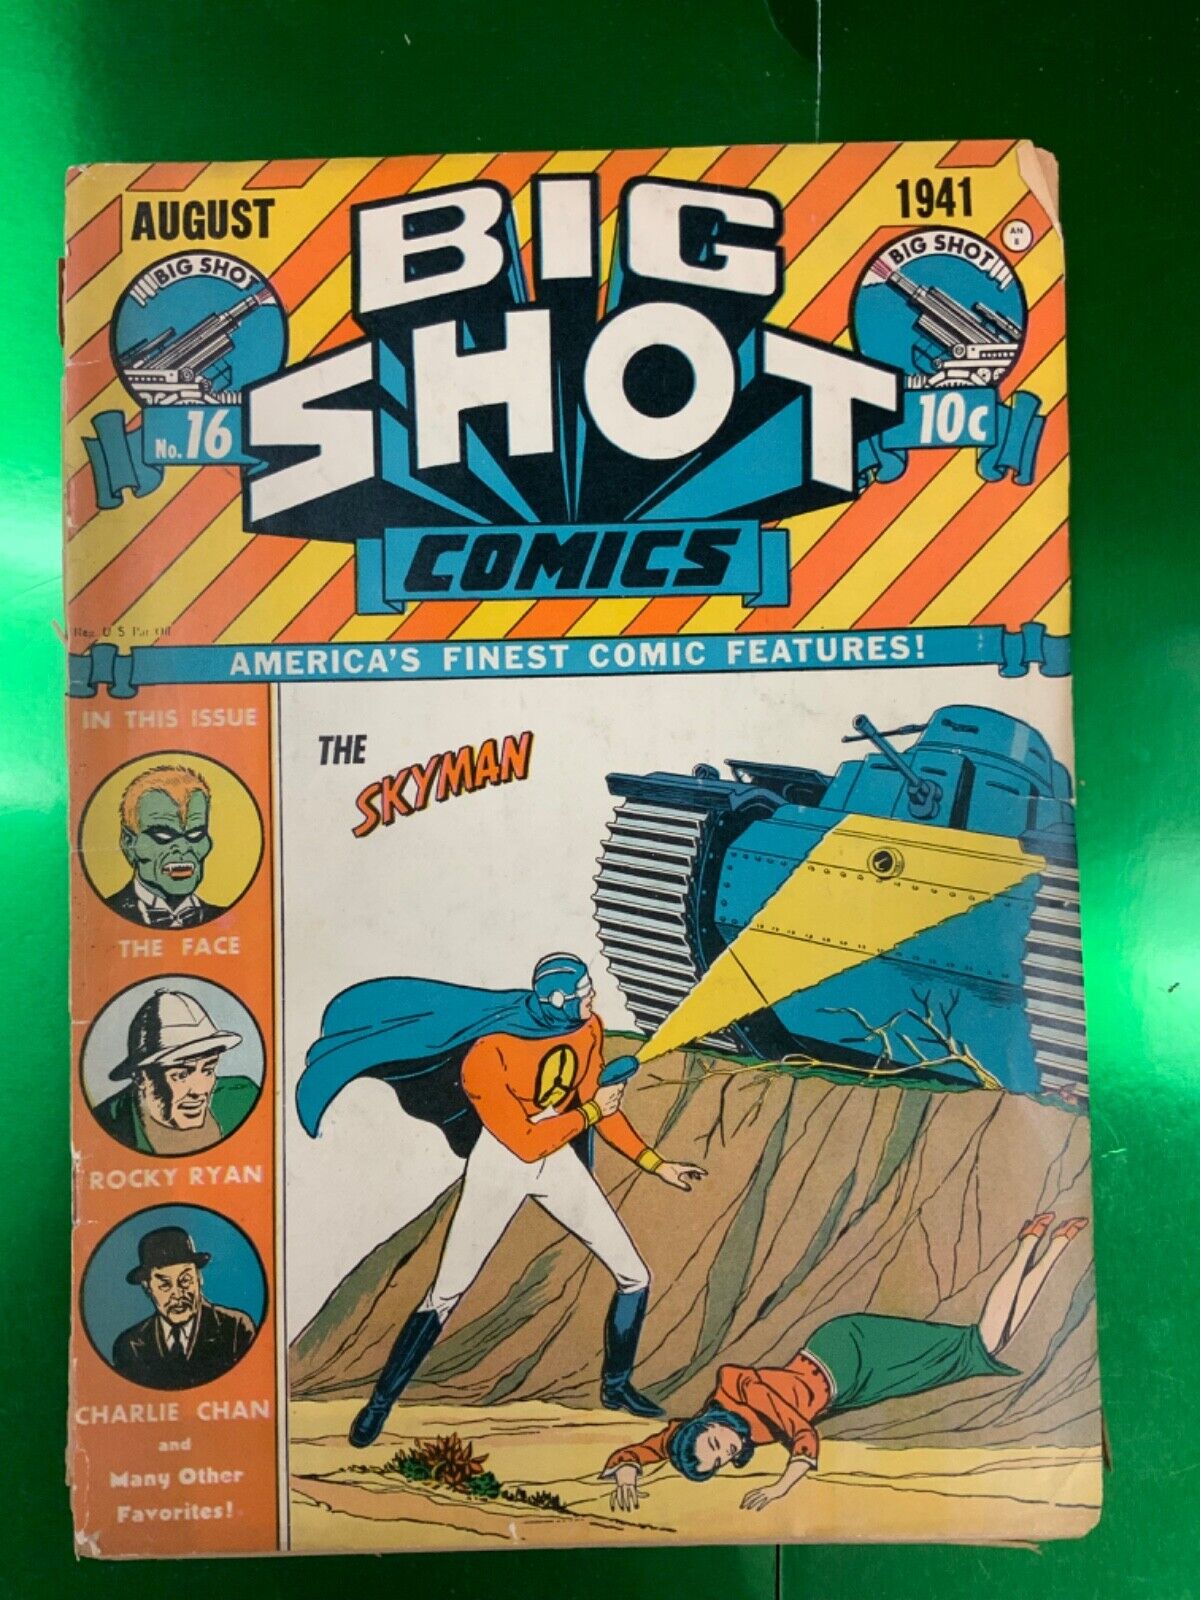 BIG SHOT Comics No. 16 AUGUST 1941 WW2 FACE - CLOAK - SPYMAN - CHARLIE CHAN   .5